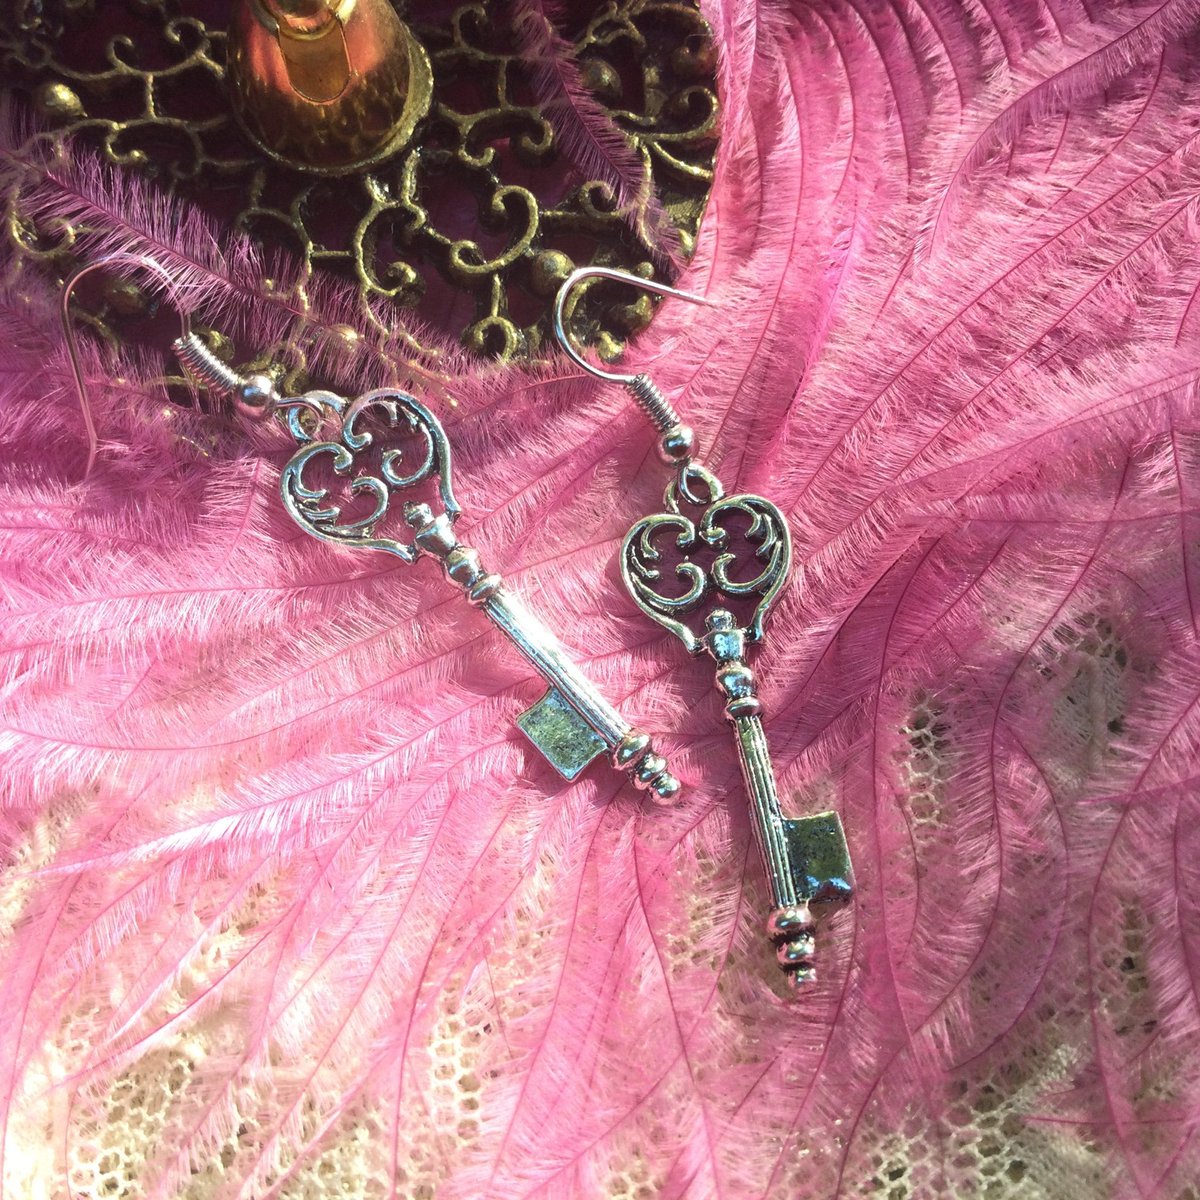 These #keyearrings are so dainty and lightweight to wear. $9.95 with #freeshipping. More #charmjewelry in our #etsyshop. #CelticJewelry #SteampunkCosplay #FairytaleJewelry #AliceinWonderlandJewelry #VictorianEarrings
#SteampunkJewelry #giftforwife etsy.me/3nfrhAs